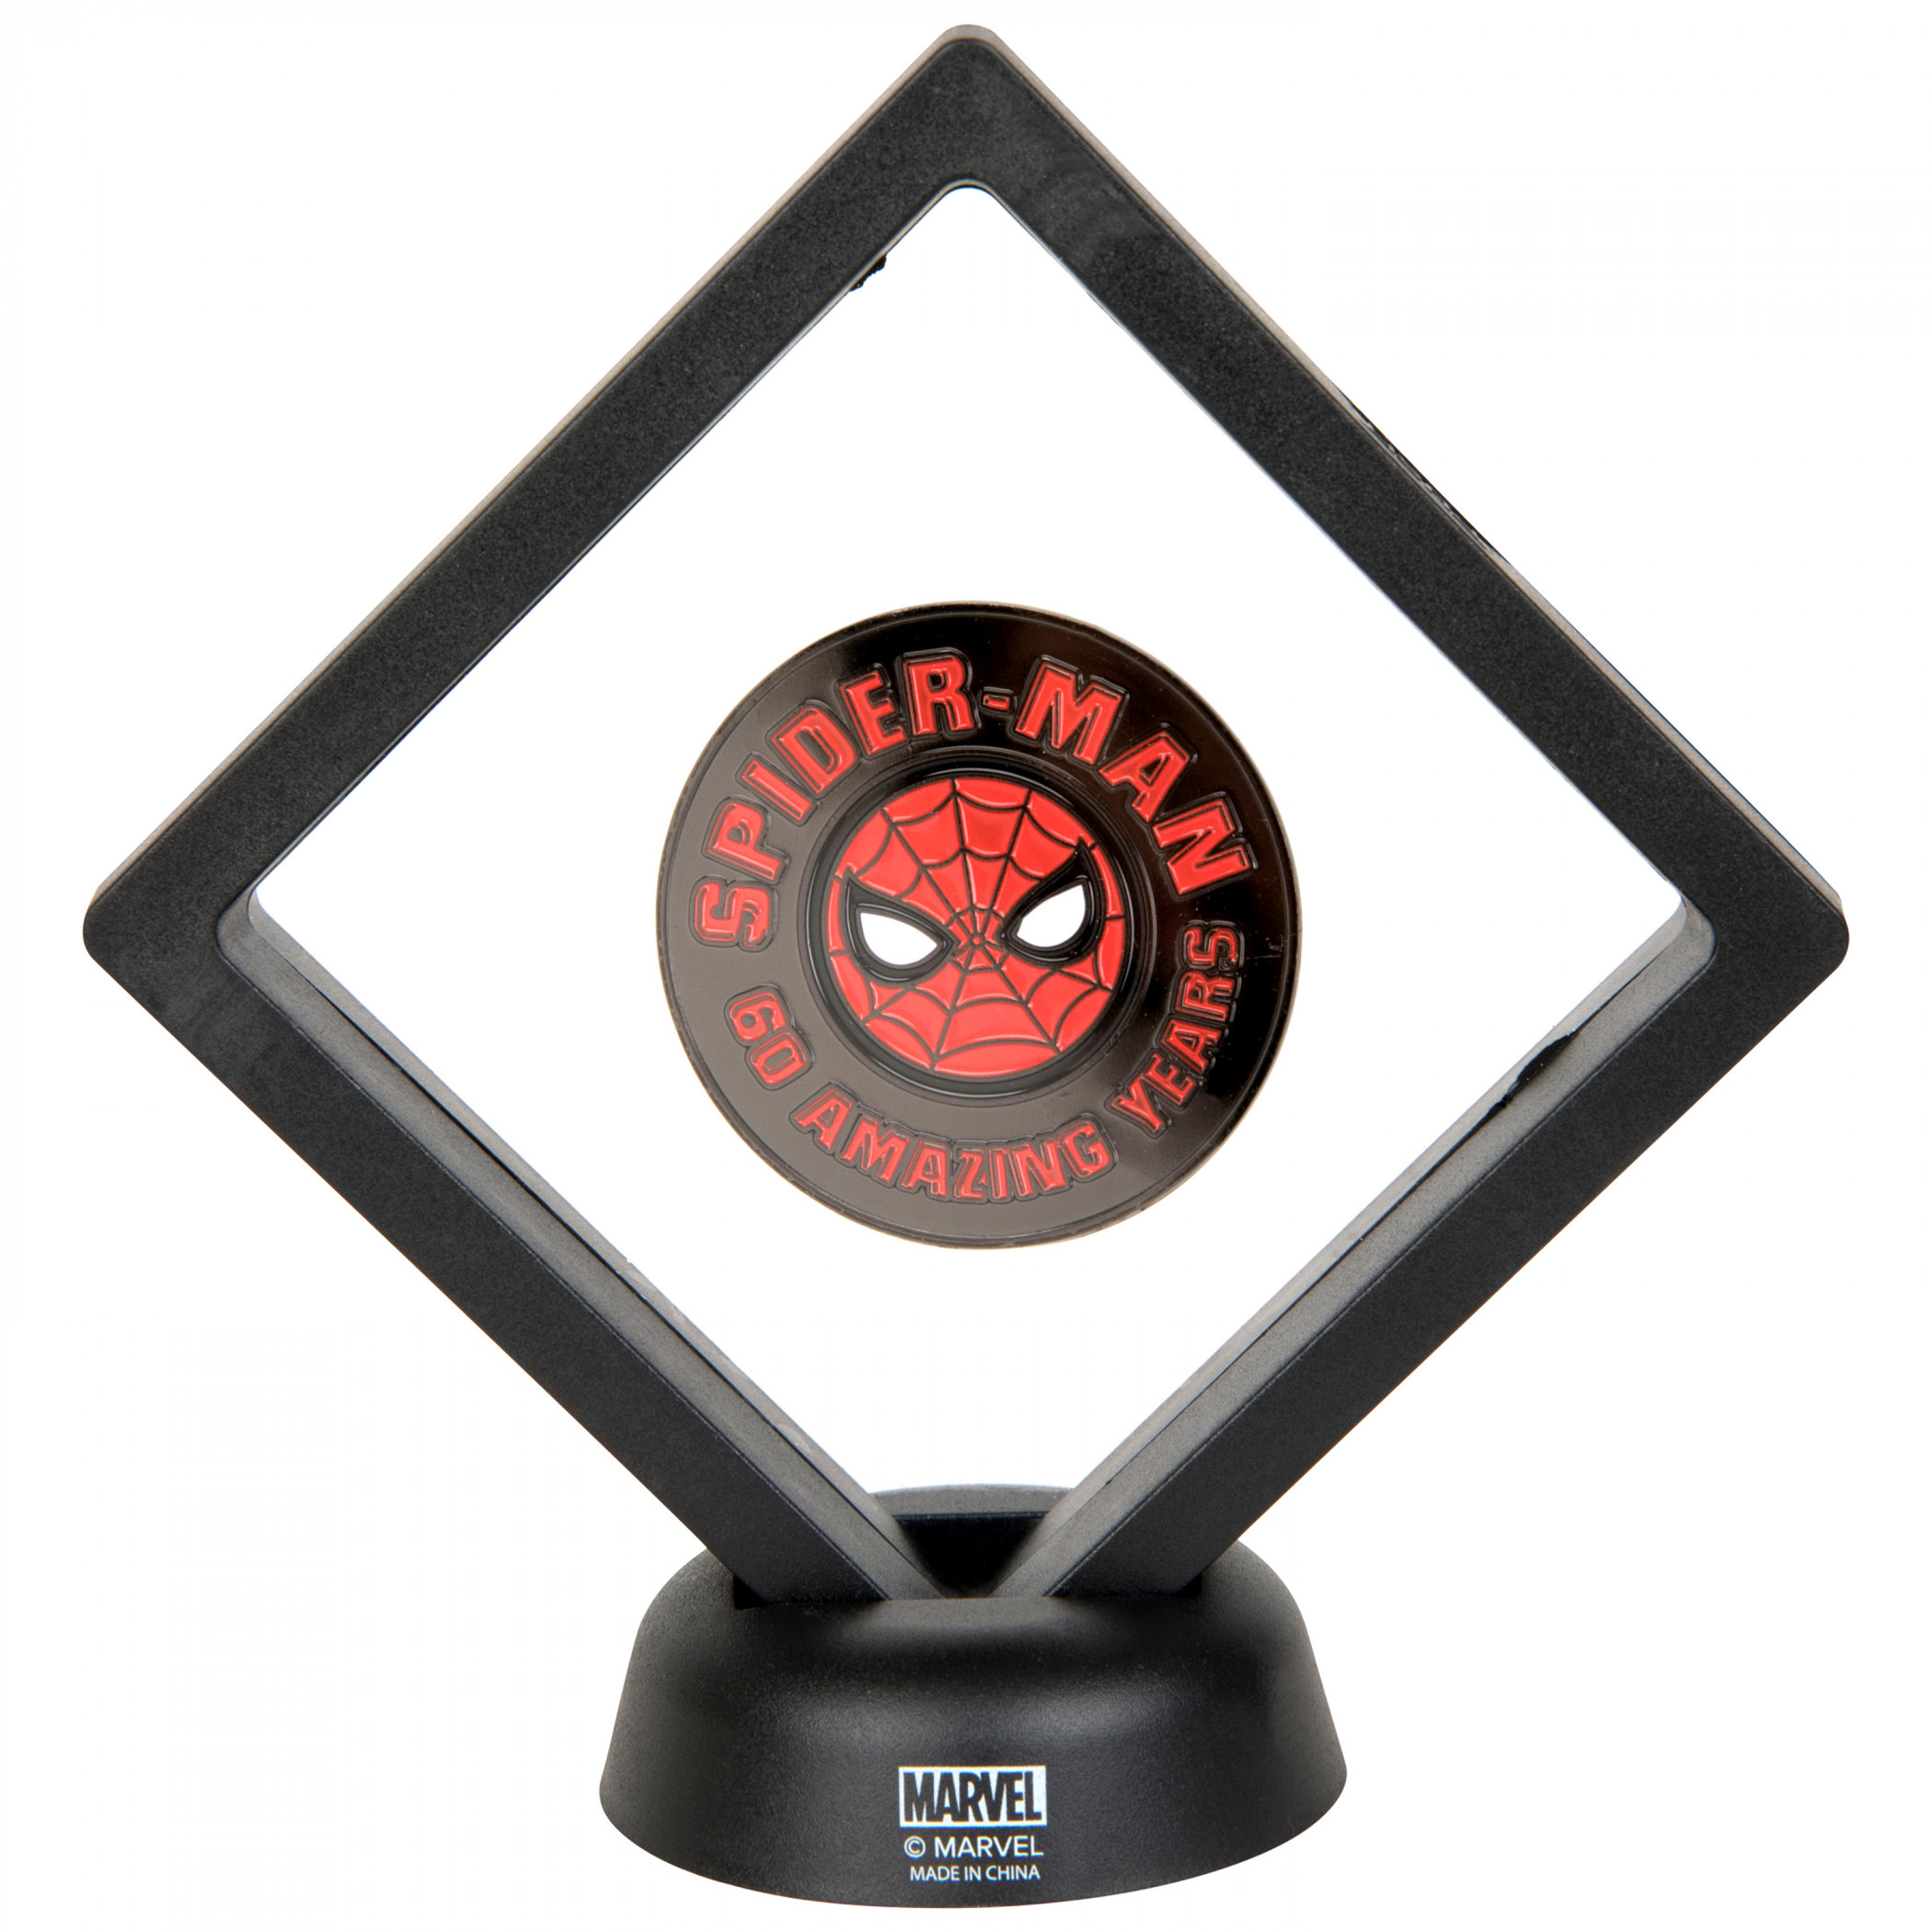 Spider-Man 60th Anniversary Kid's Winter Bundle Collection